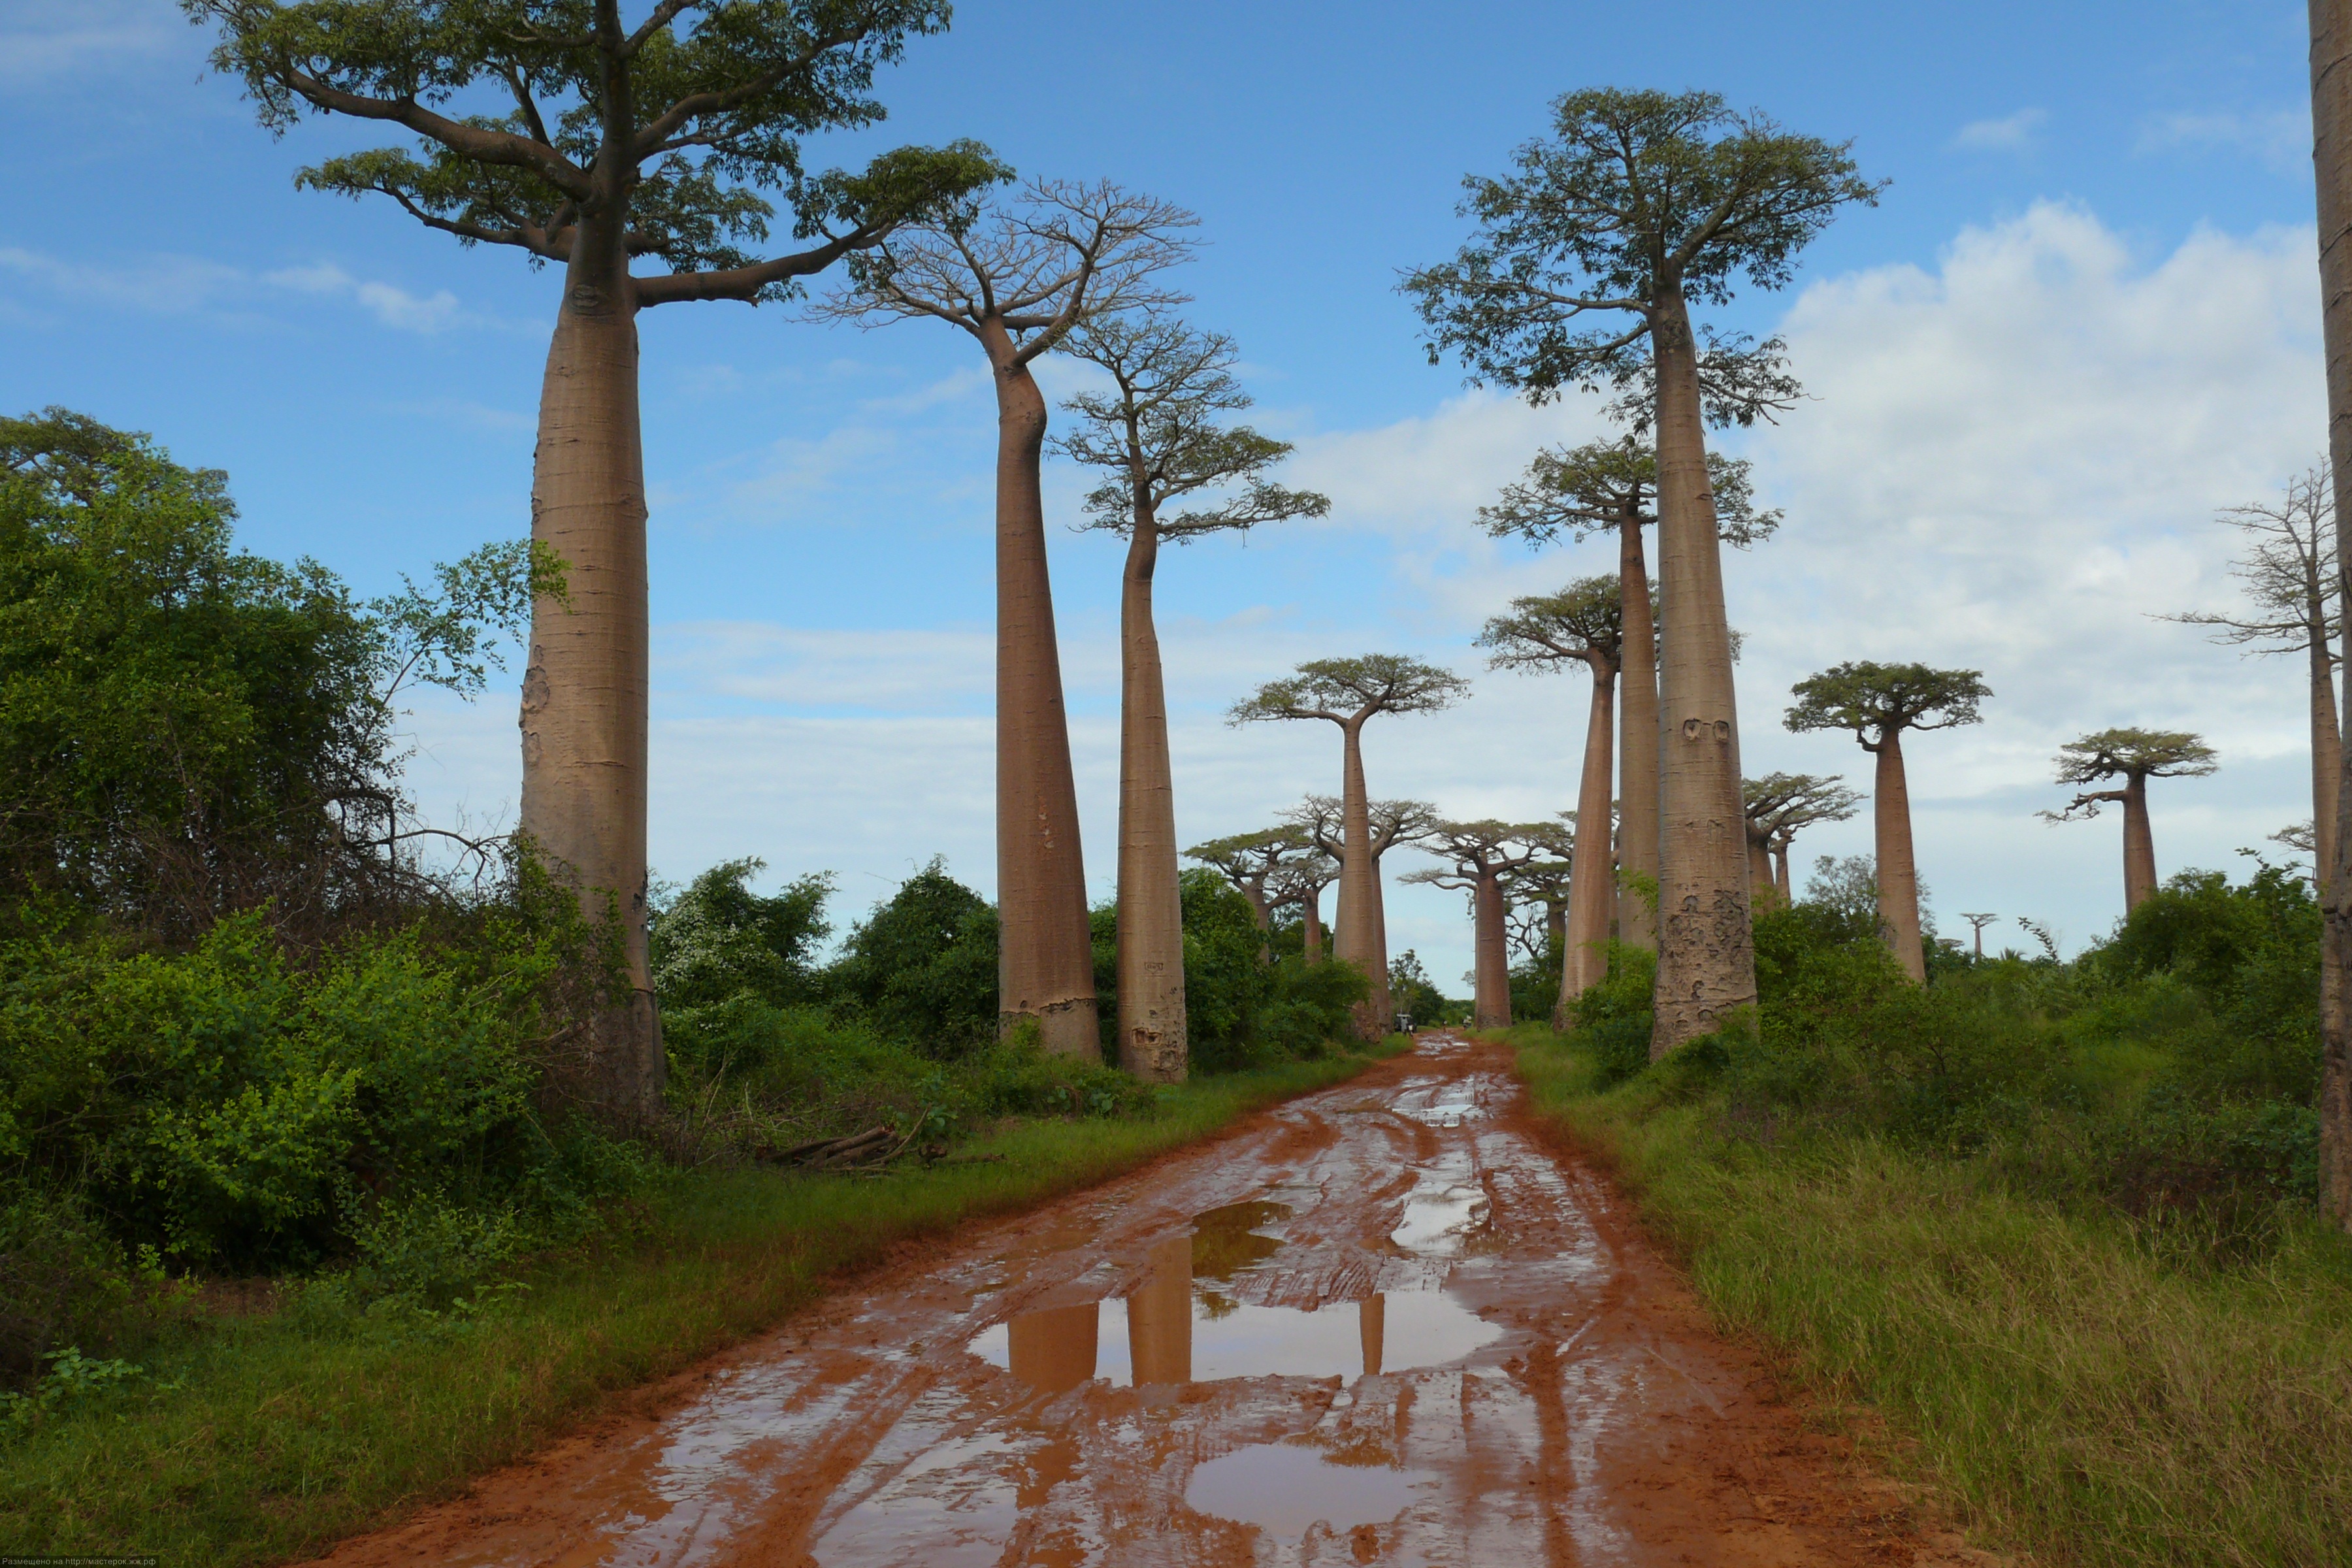 Фото баобаба дерево в африке